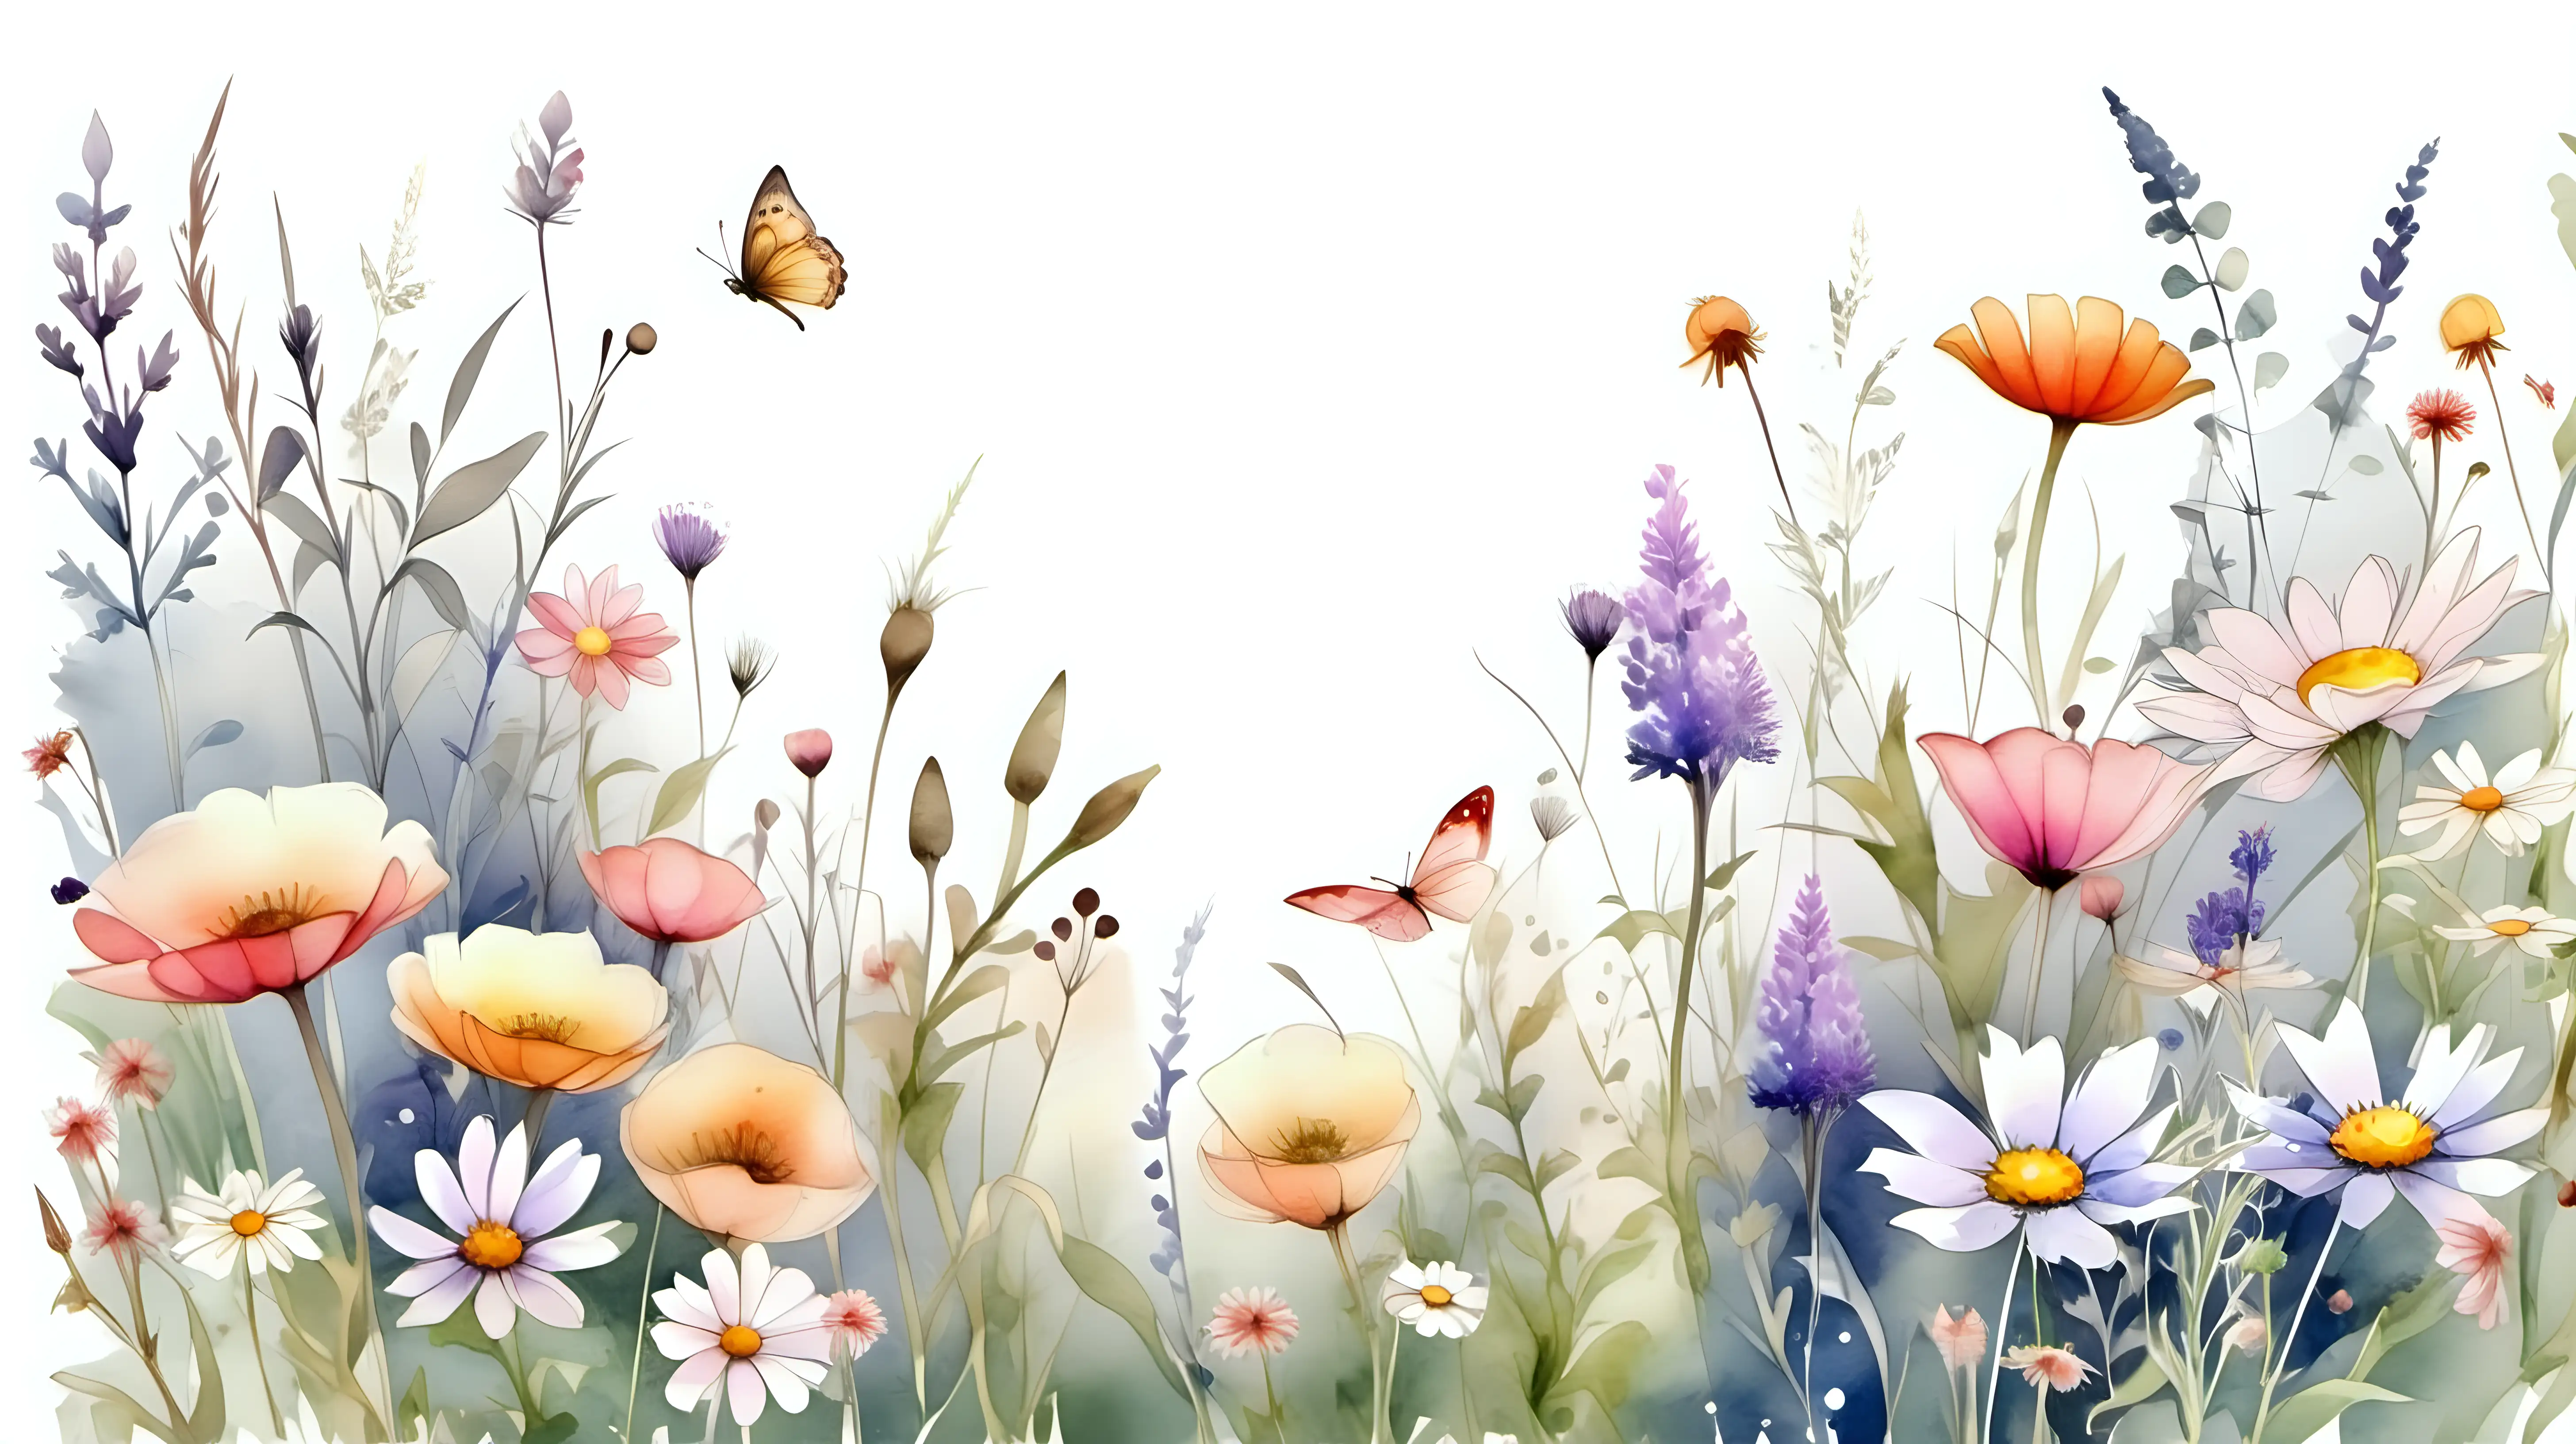 Enchanting Fairytale Meadow Flowers Illustration